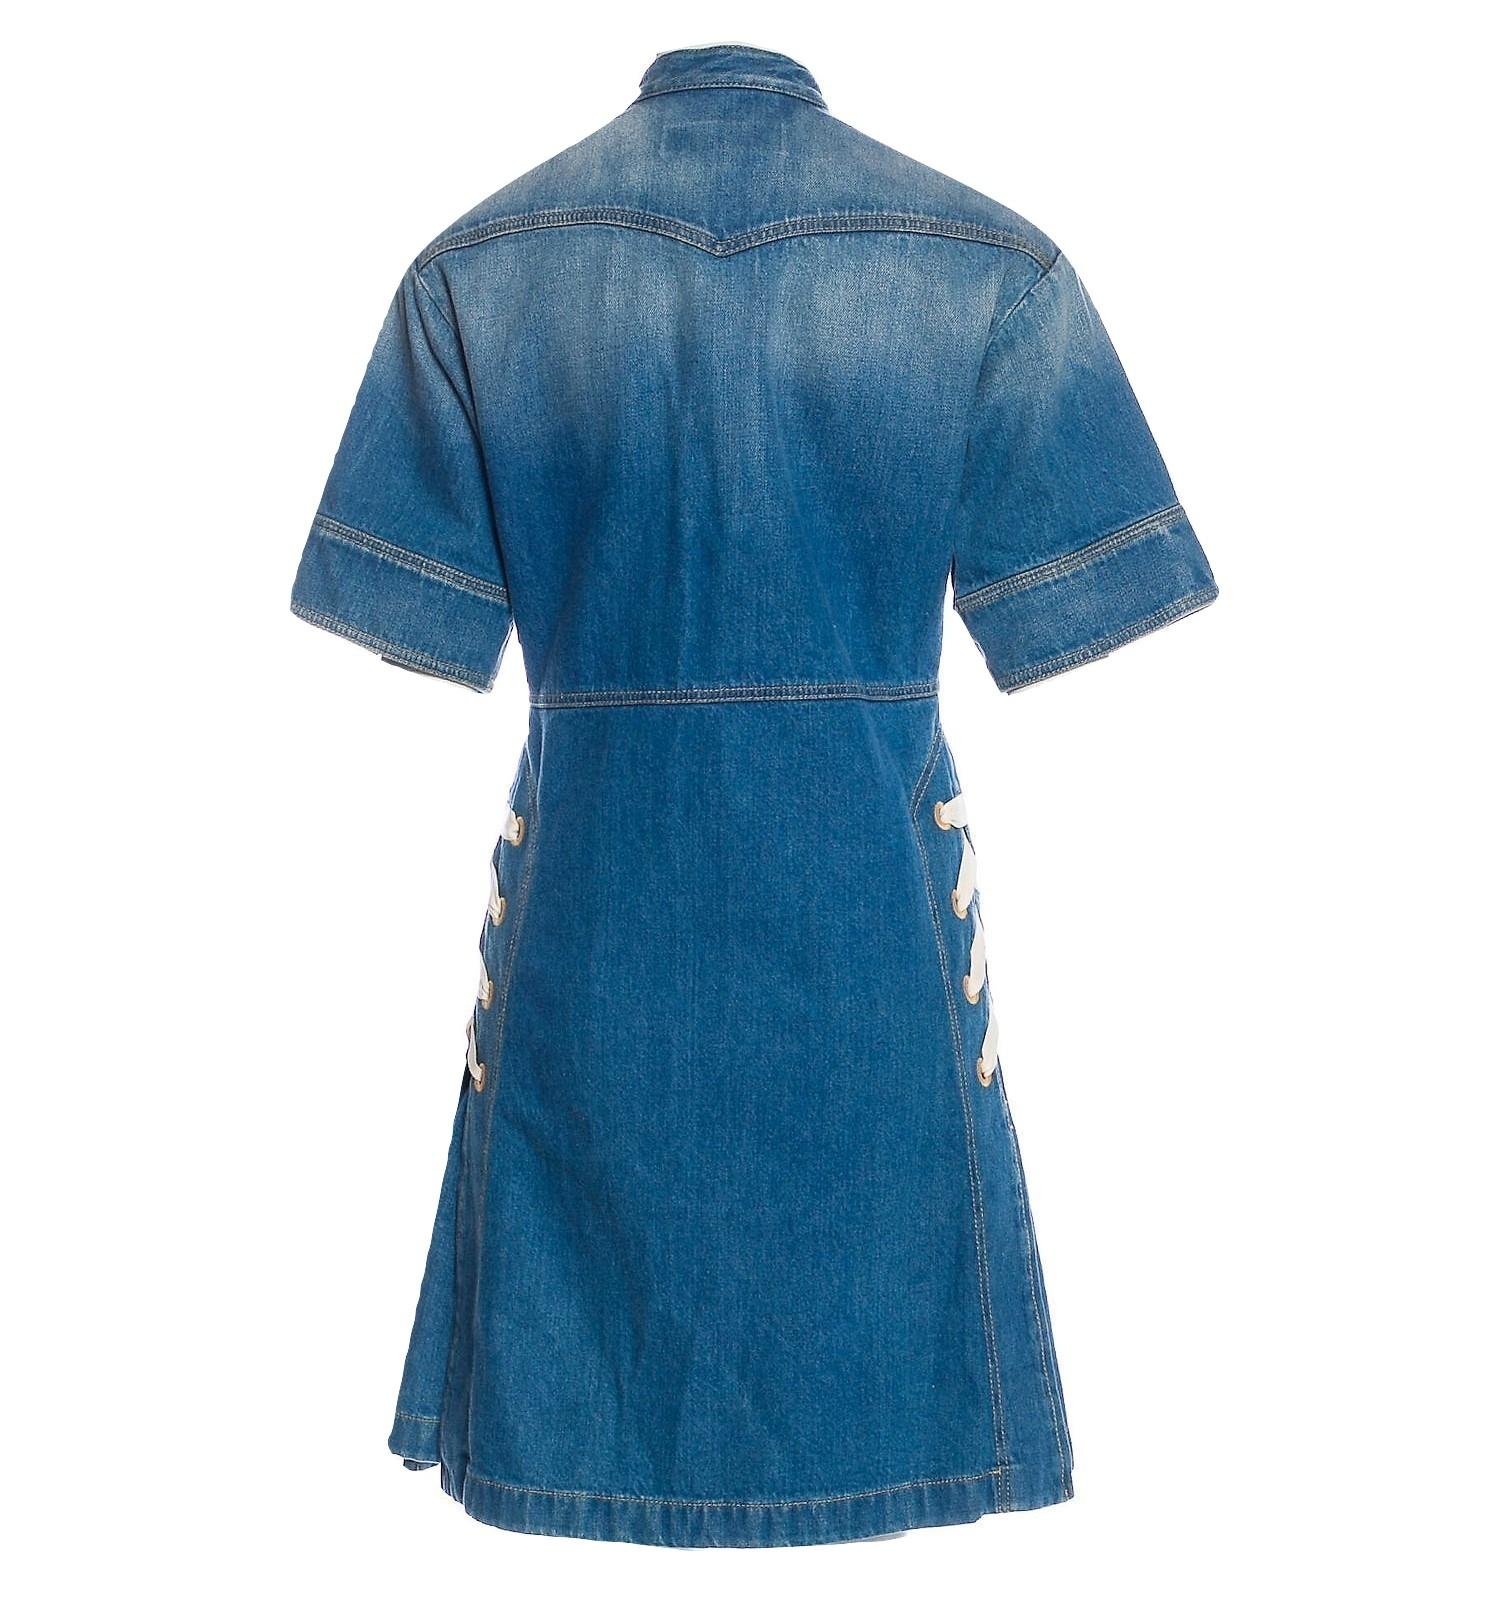 New Rare Gucci Runway Ad Denim Dress S/S 2015 Sz 40 $2950 For Sale 7